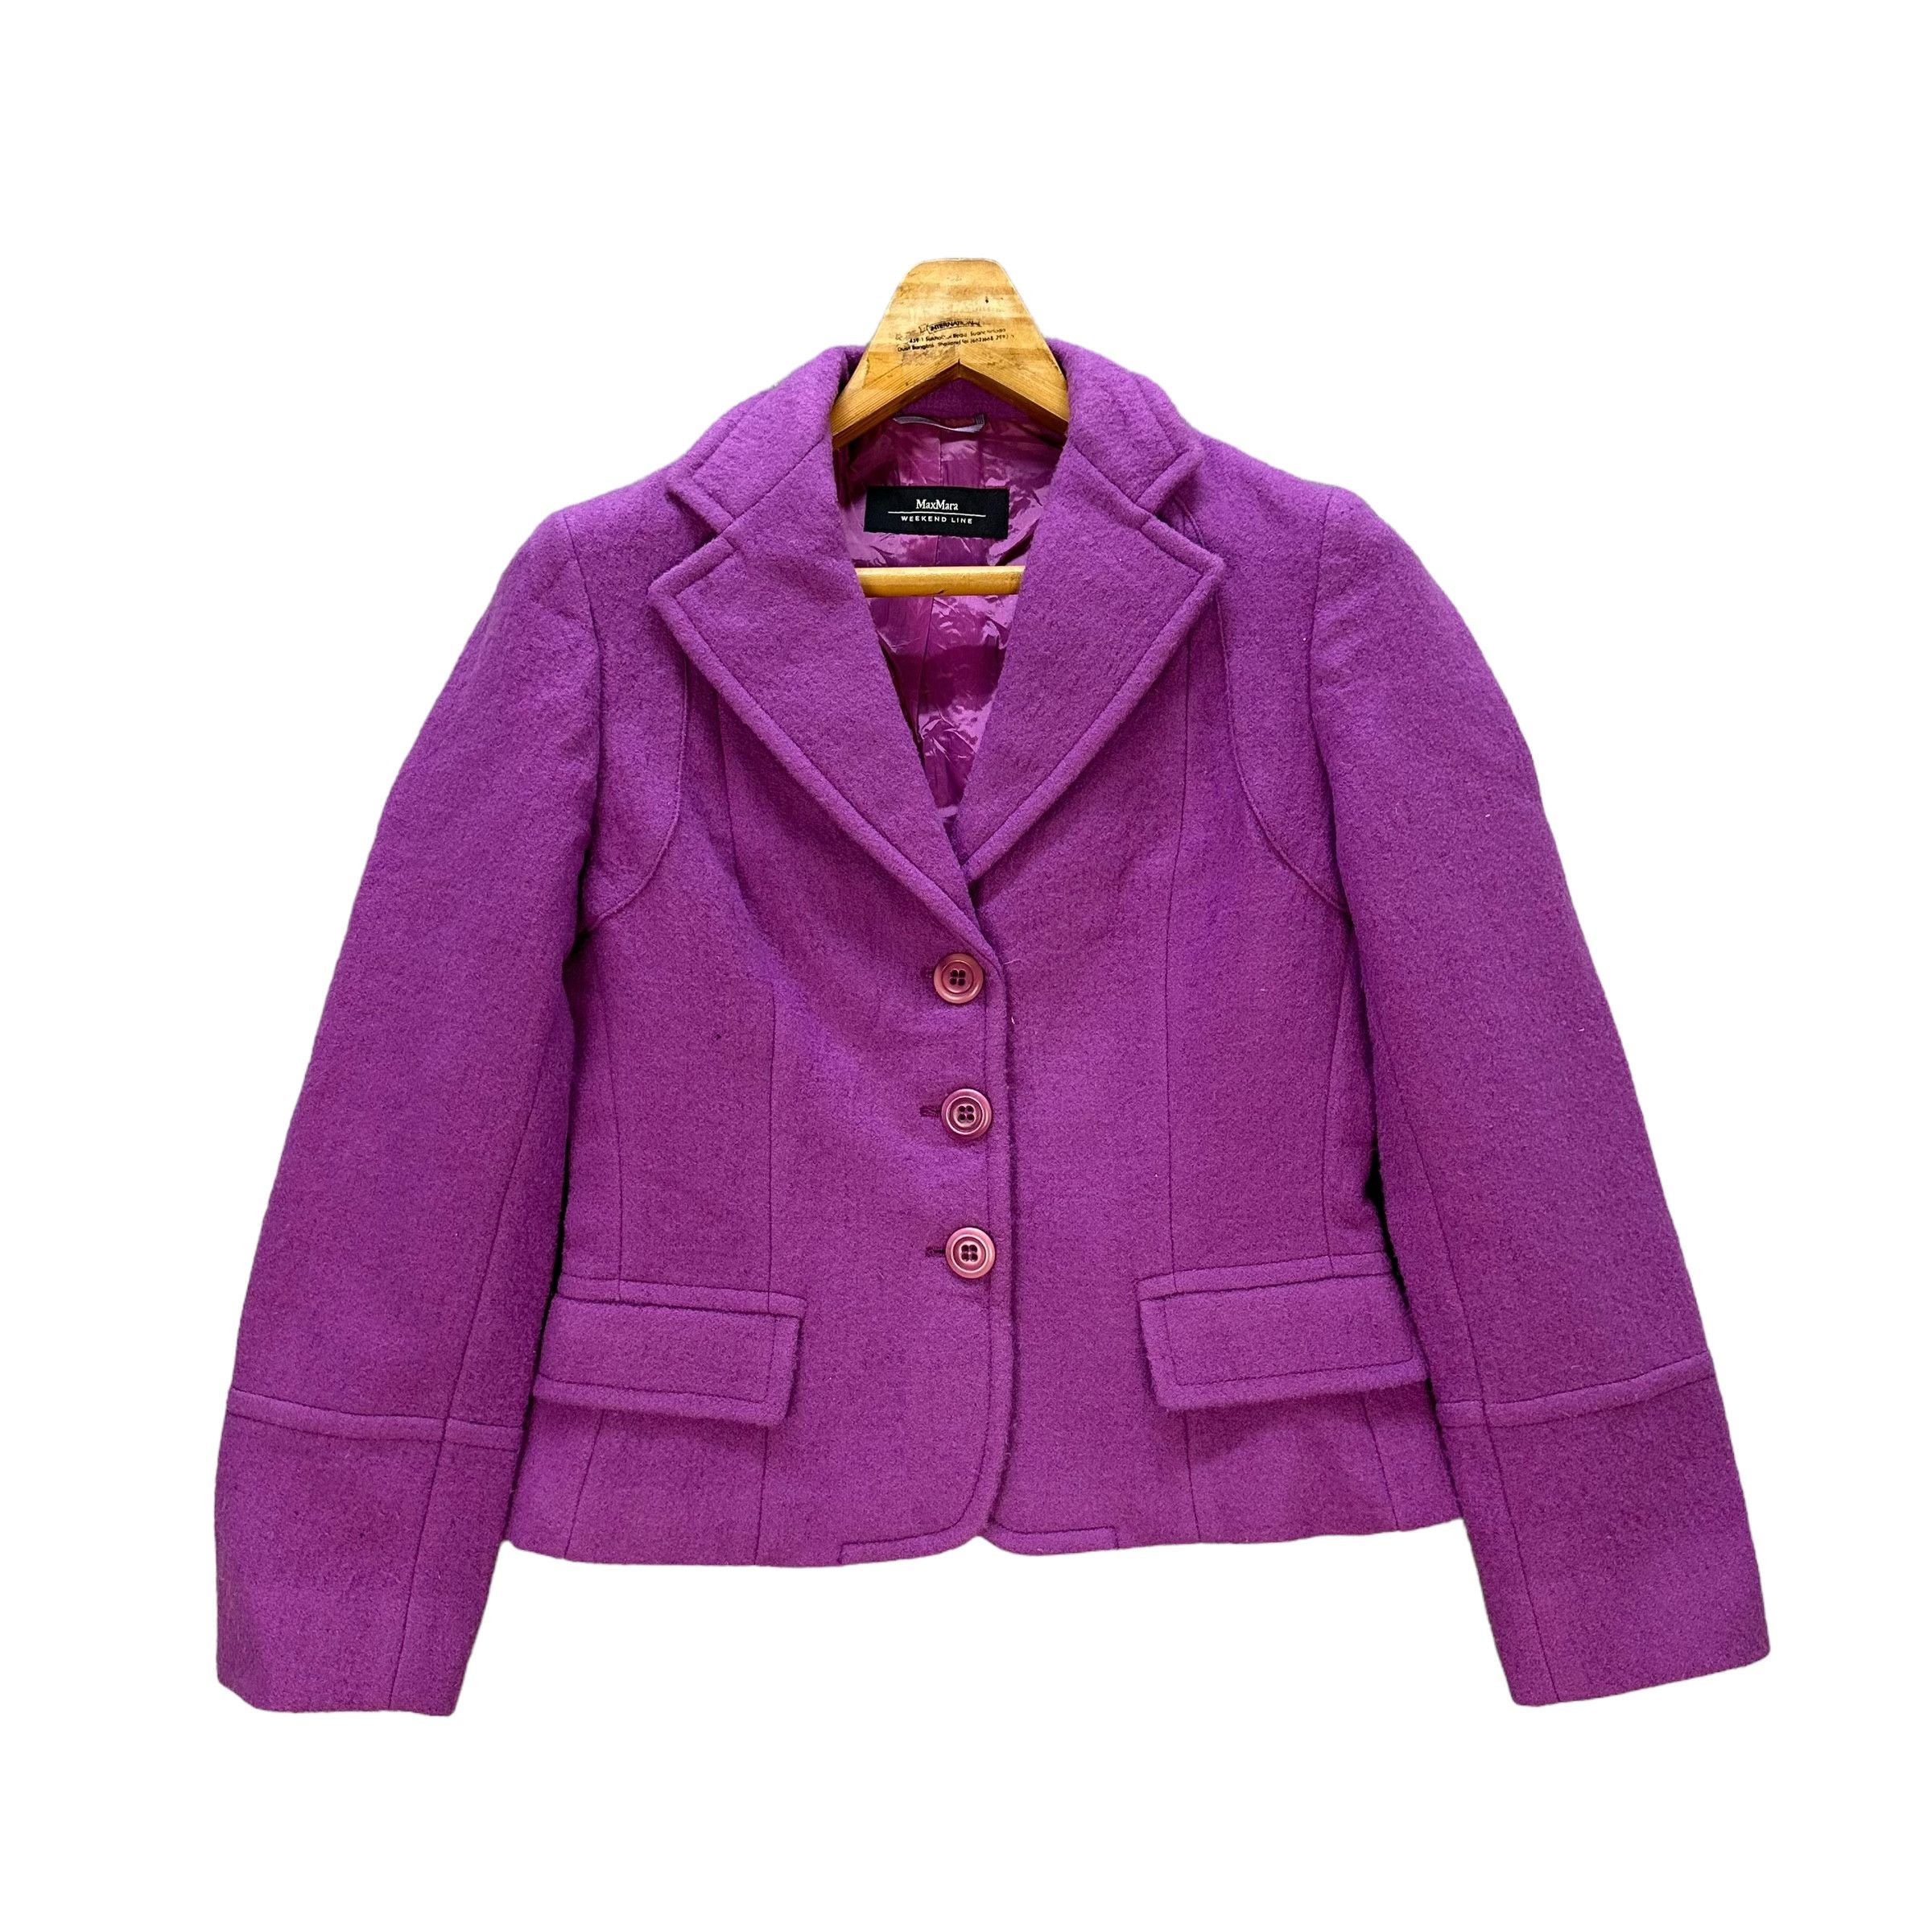 Designer - Max Mara Purple Wool Double Collar Jacket #9132-60 - 1